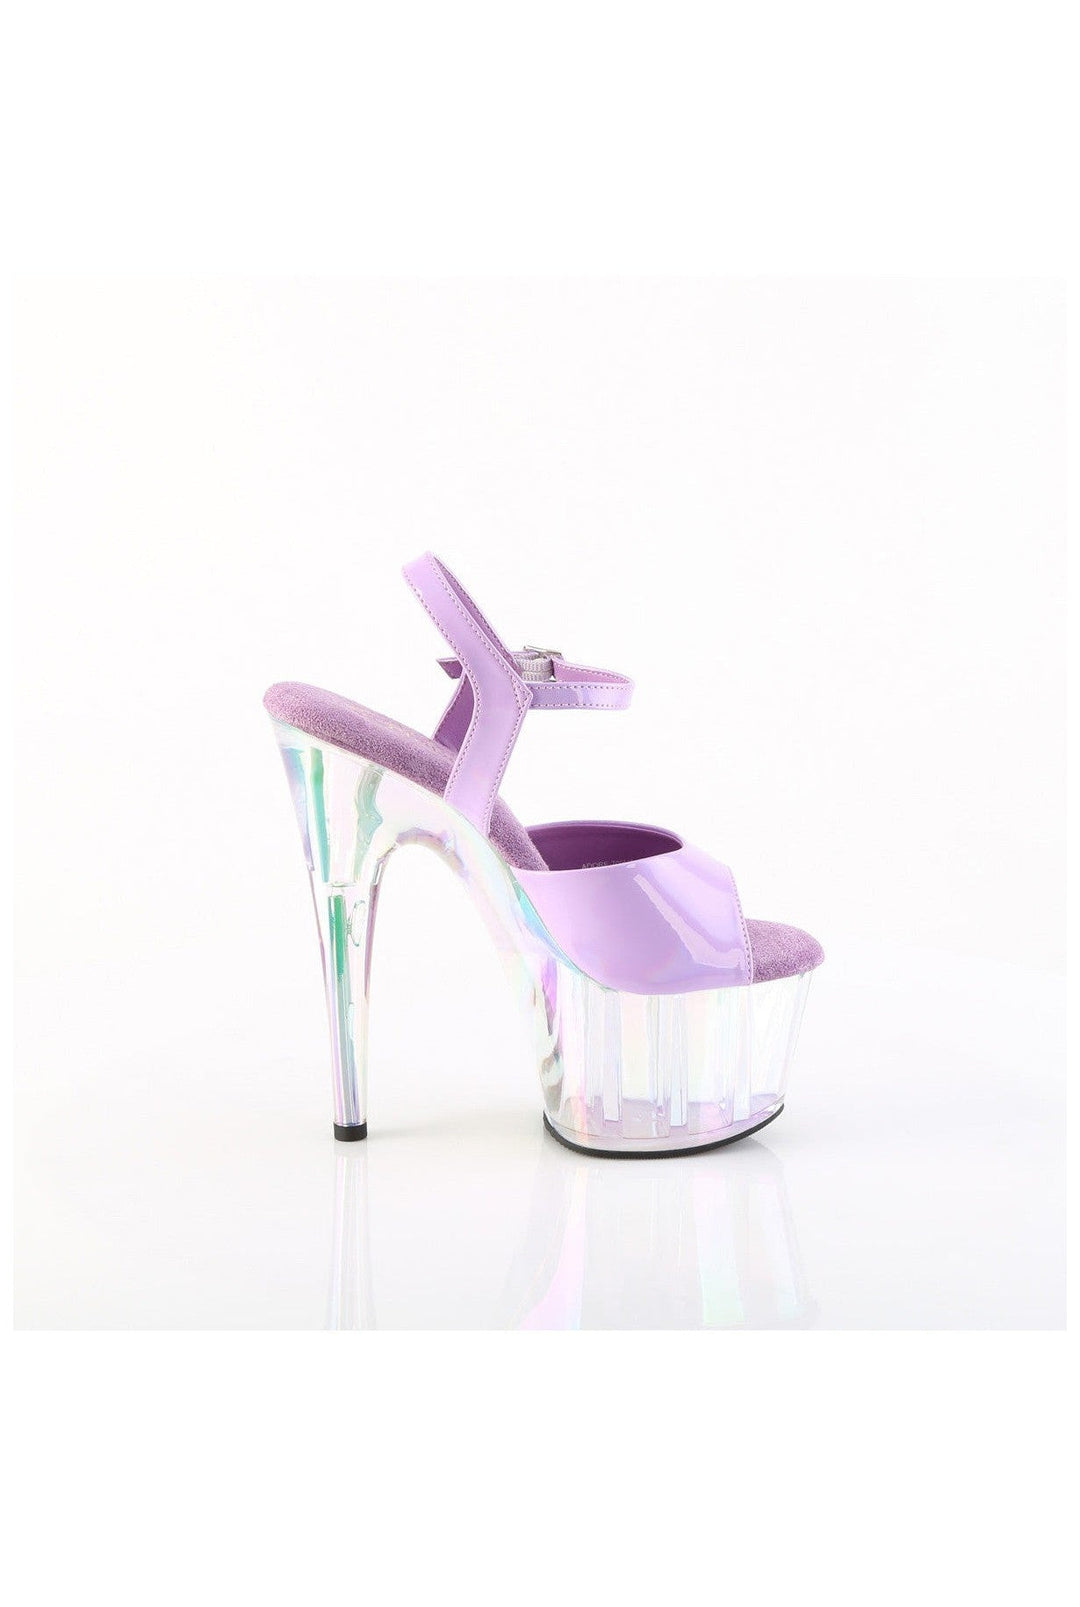 ADORE-709HT Purple Patent Sandal